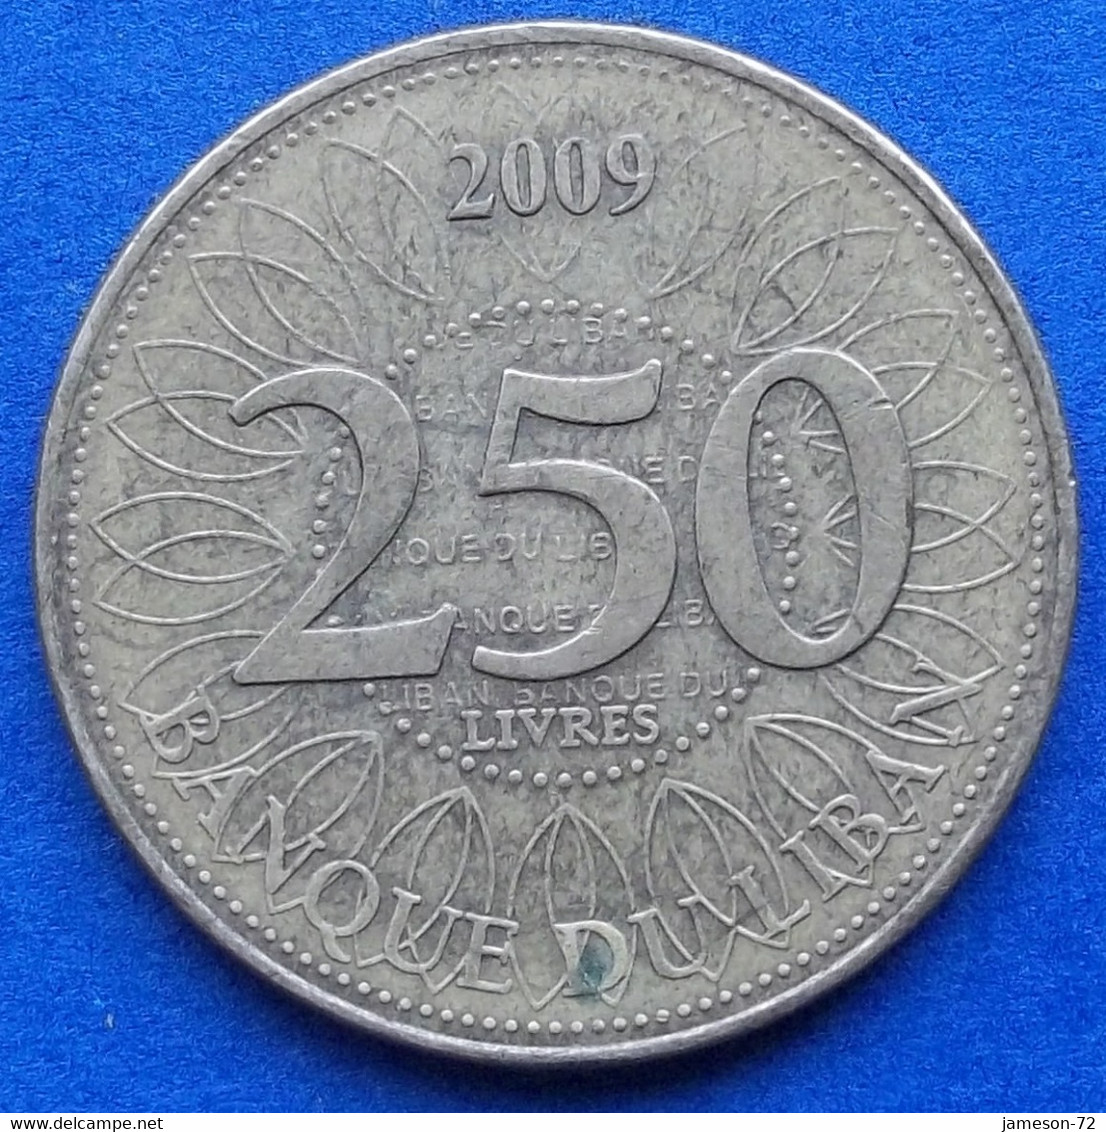 LEBANON - 250 Livres 2009 KM# 36 Independent Republic - Edelweiss Coins - Lebanon